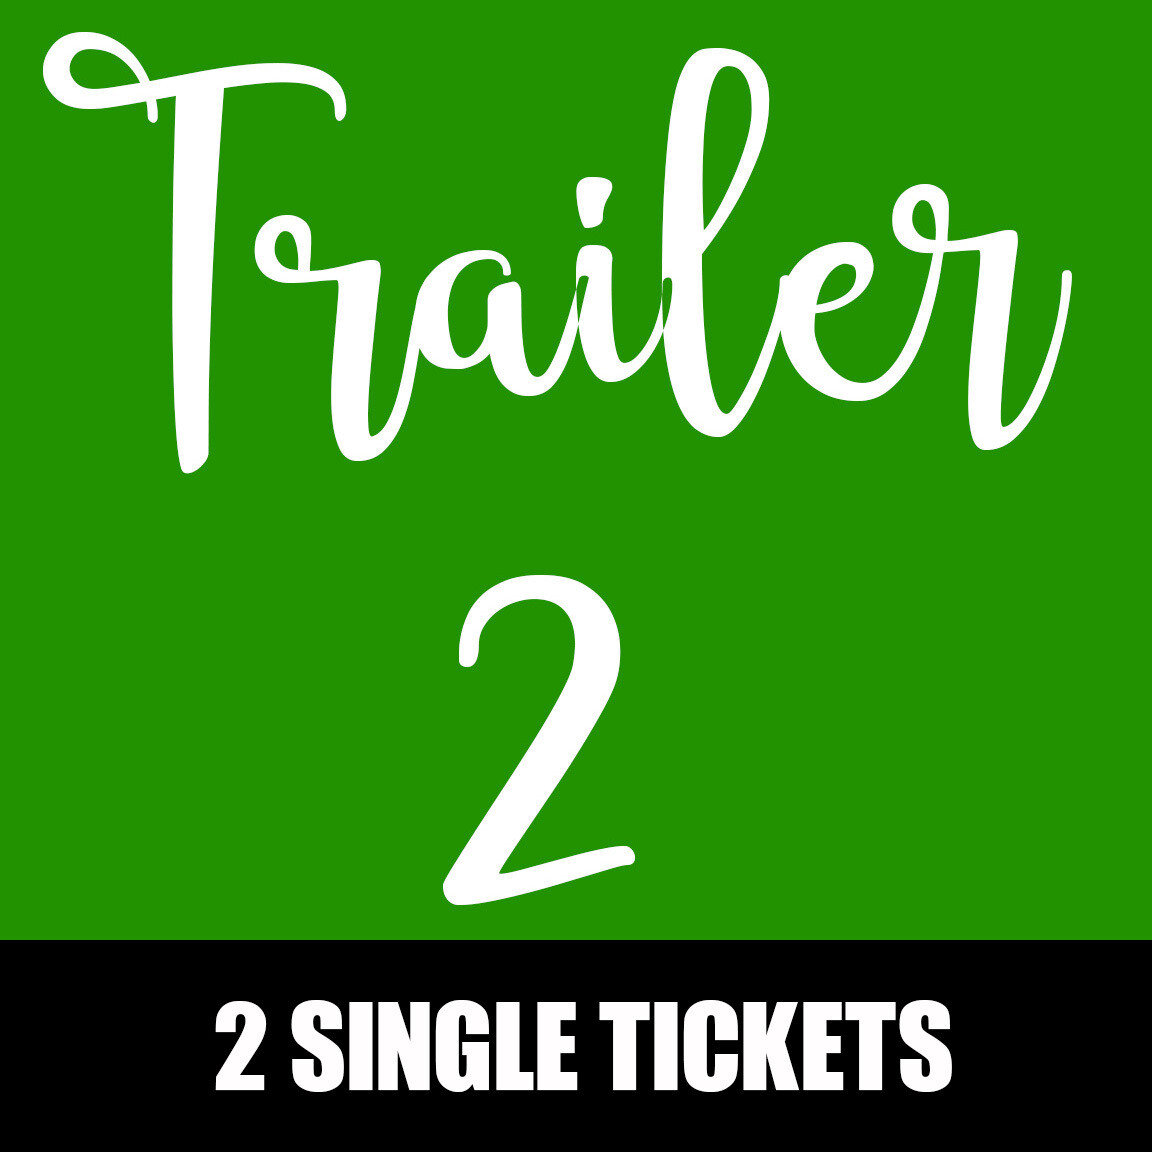 Trailer 2 - December 8th @ 10pm - 2 Single Tickets